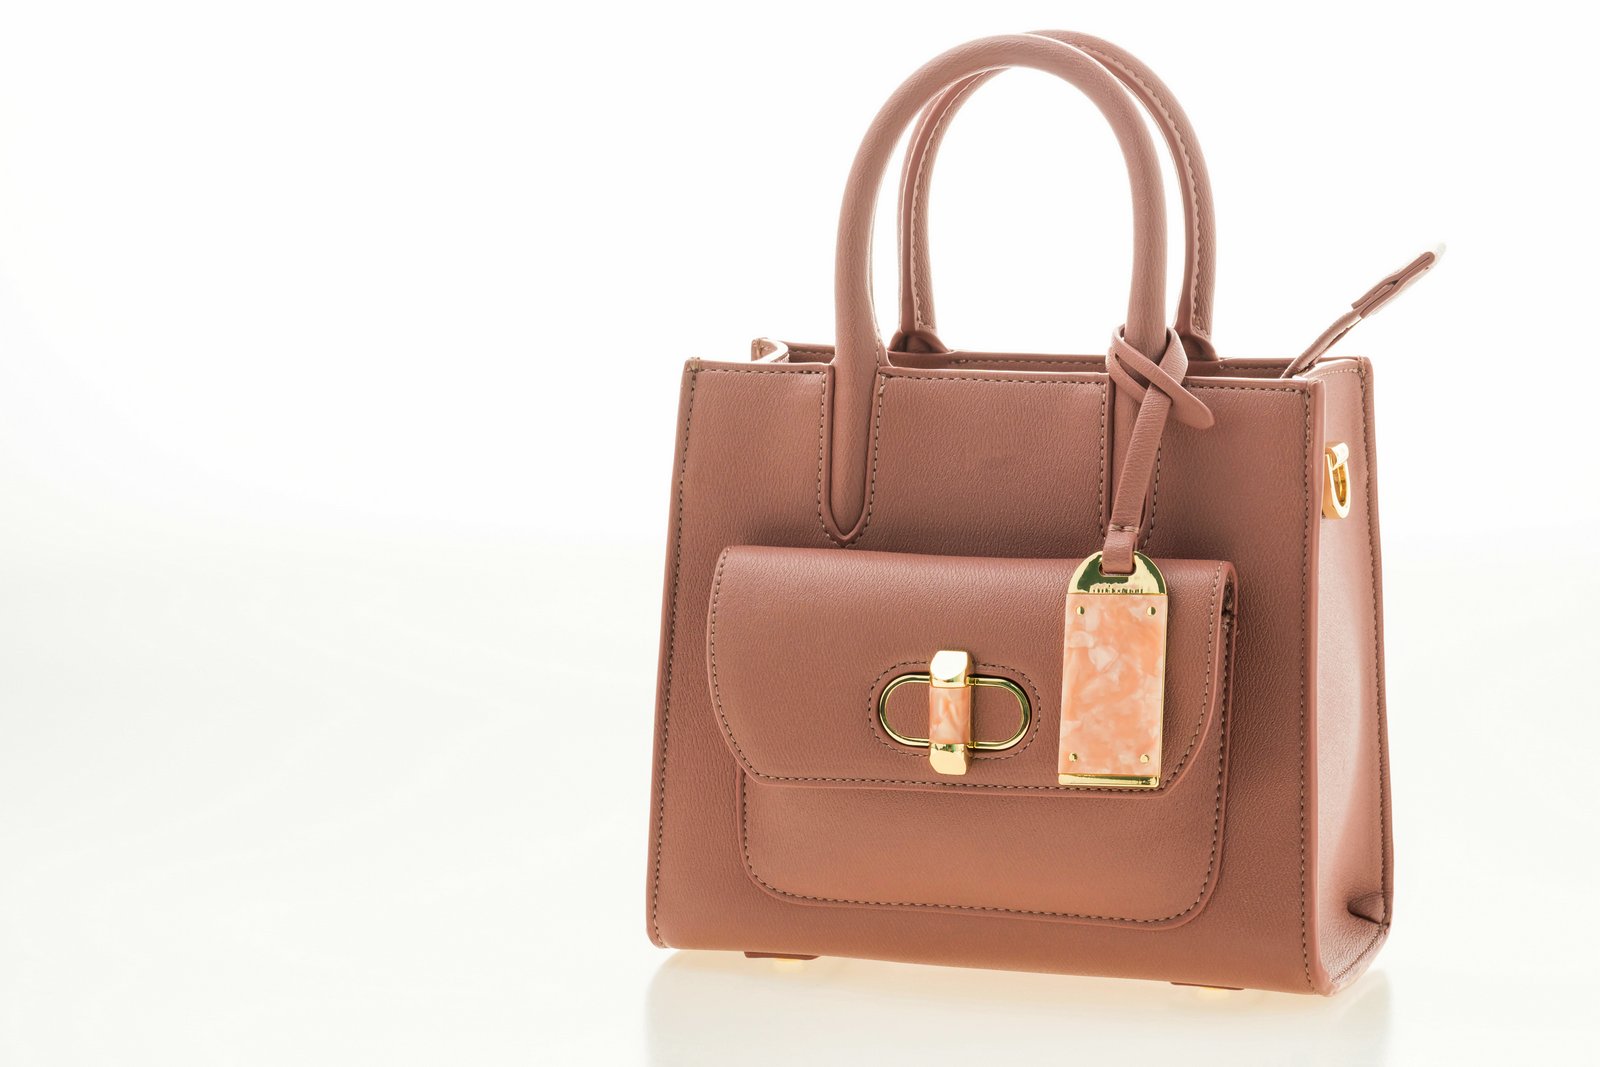 Designer handbag - real or fake purse